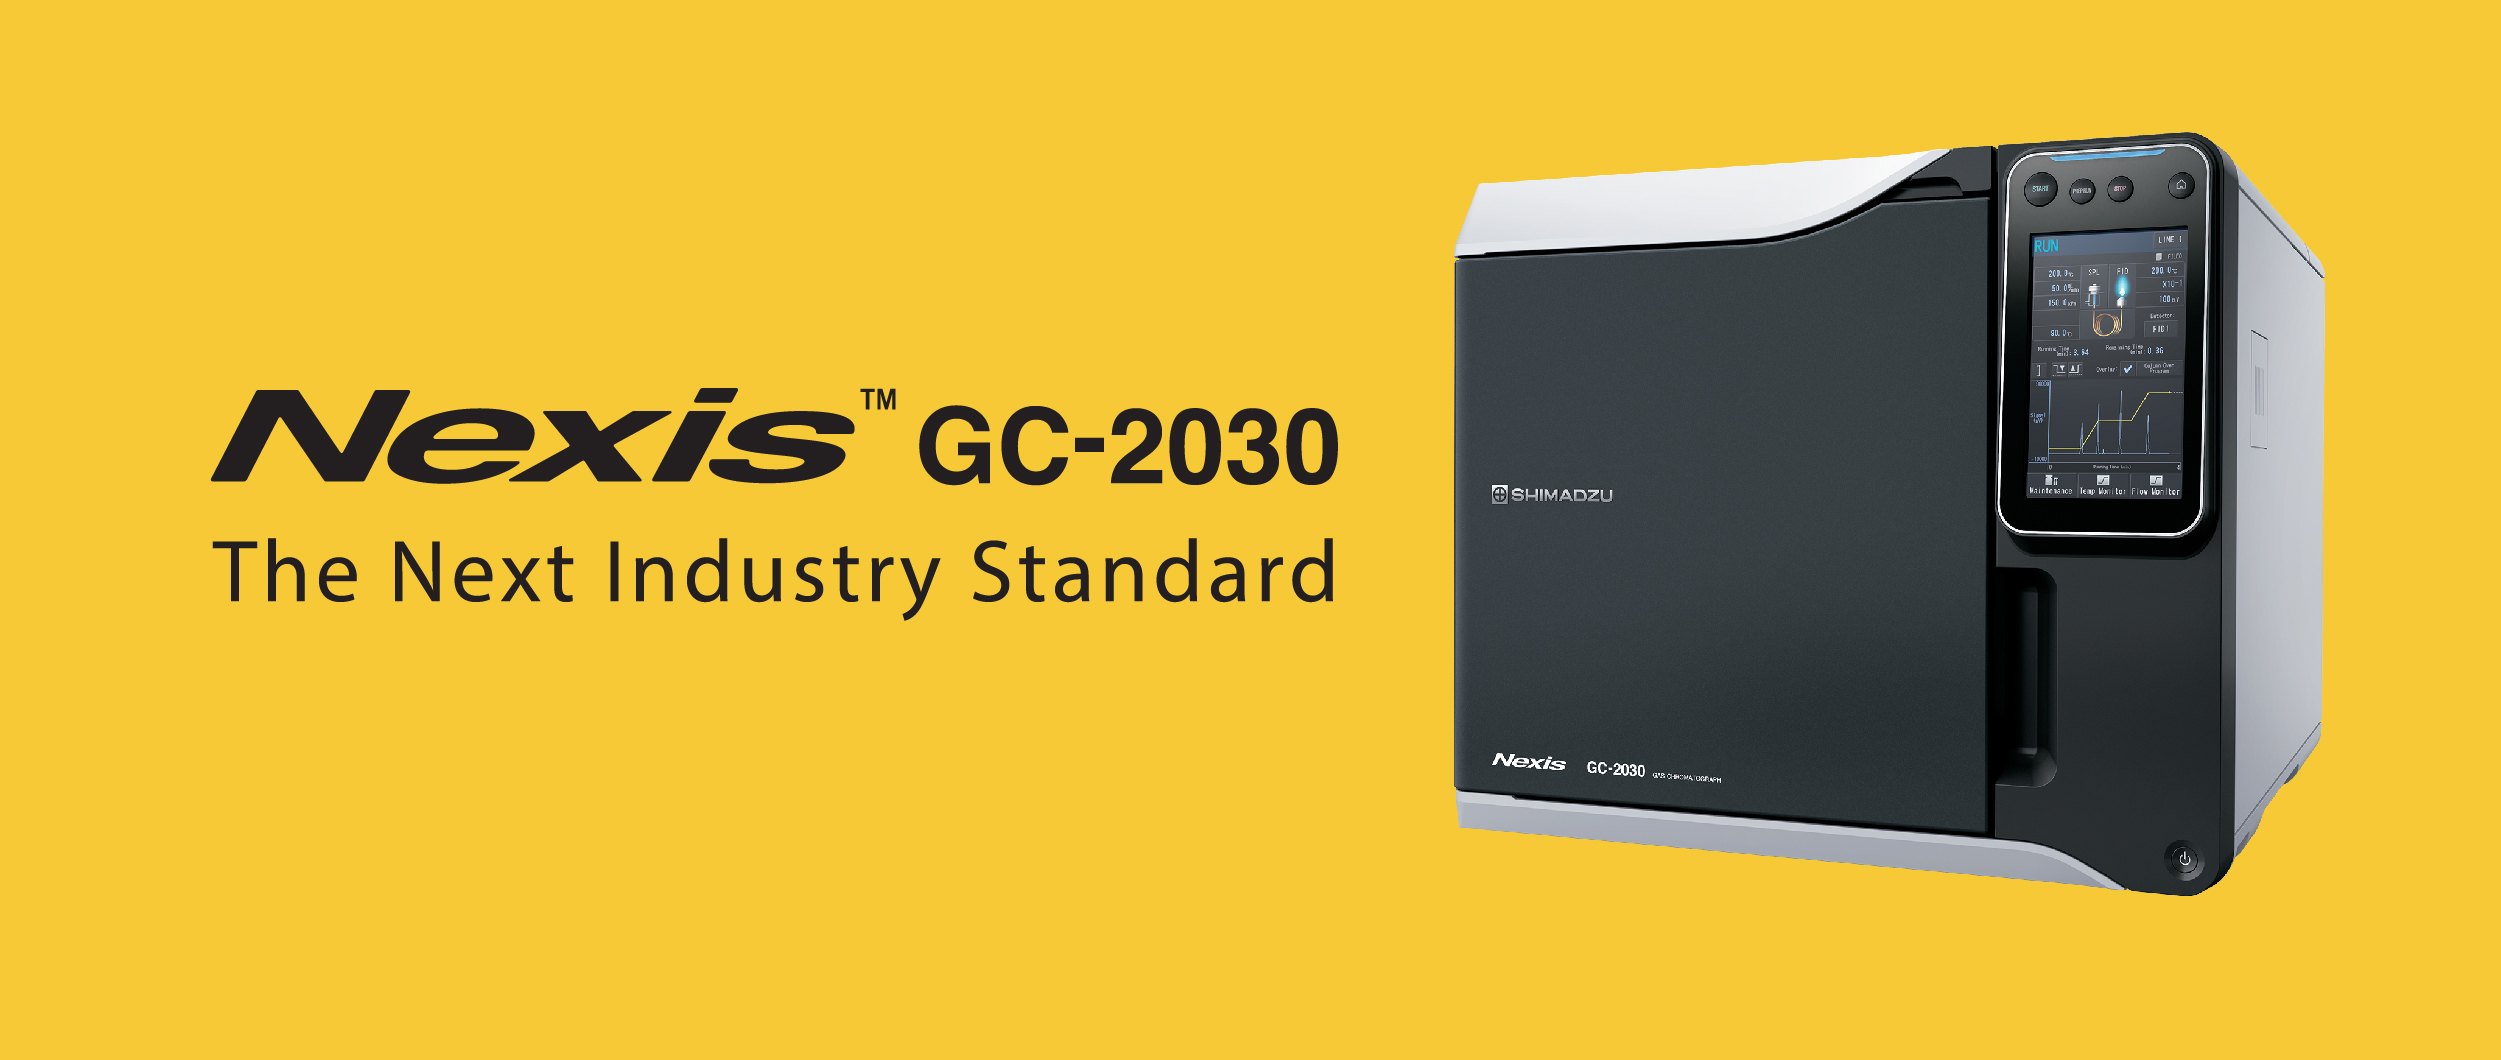 Nexis GC-2030, The Next Industry Standard